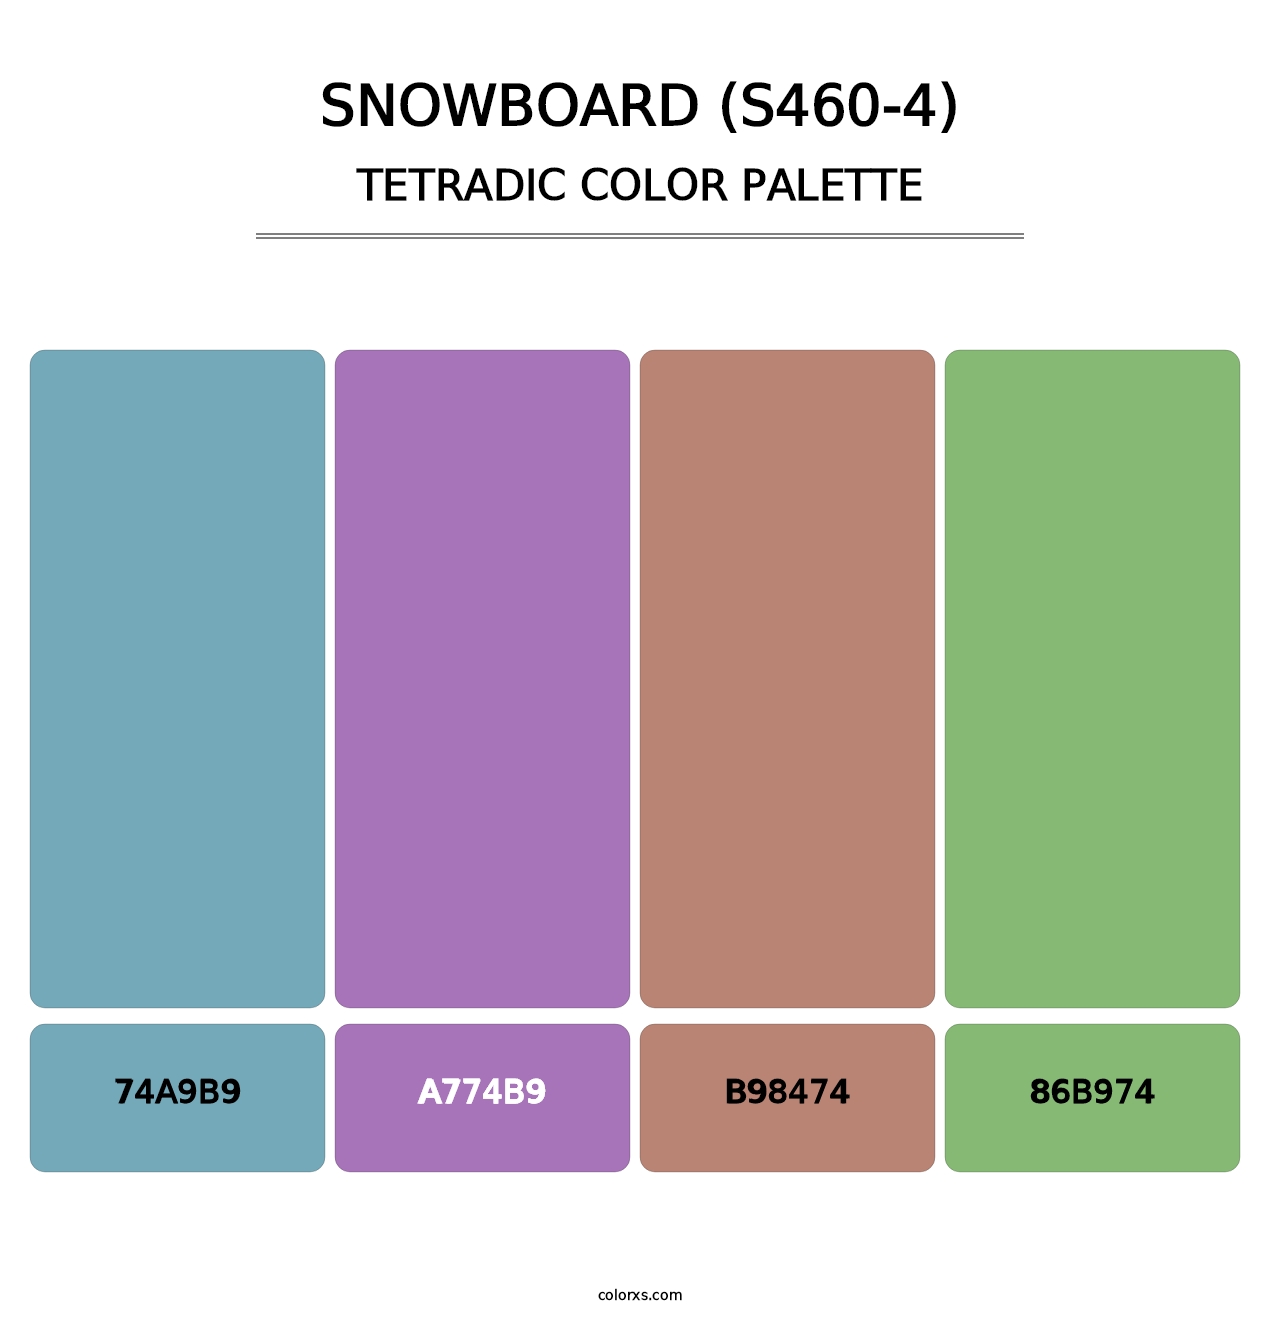 Snowboard (S460-4) - Tetradic Color Palette